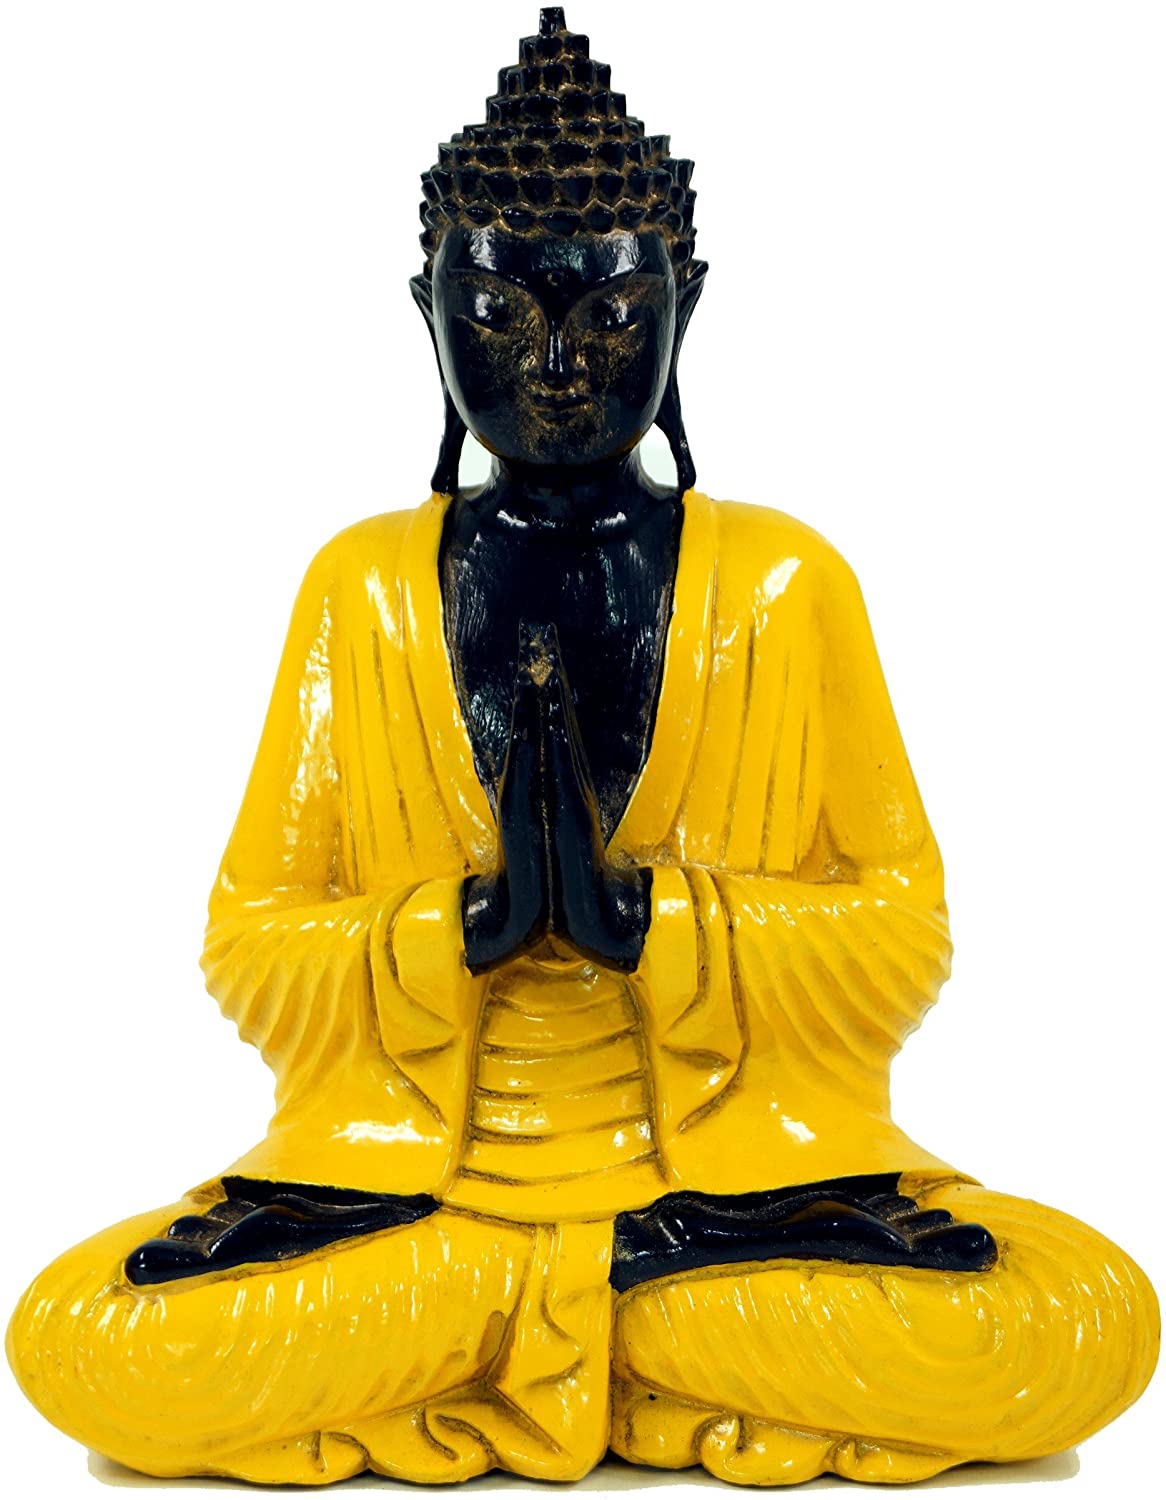 GURU SHOP Carved Sitting Buddha in Anjali Mudra, Yellow, 30 x 25 x 13 cm, Buddhas